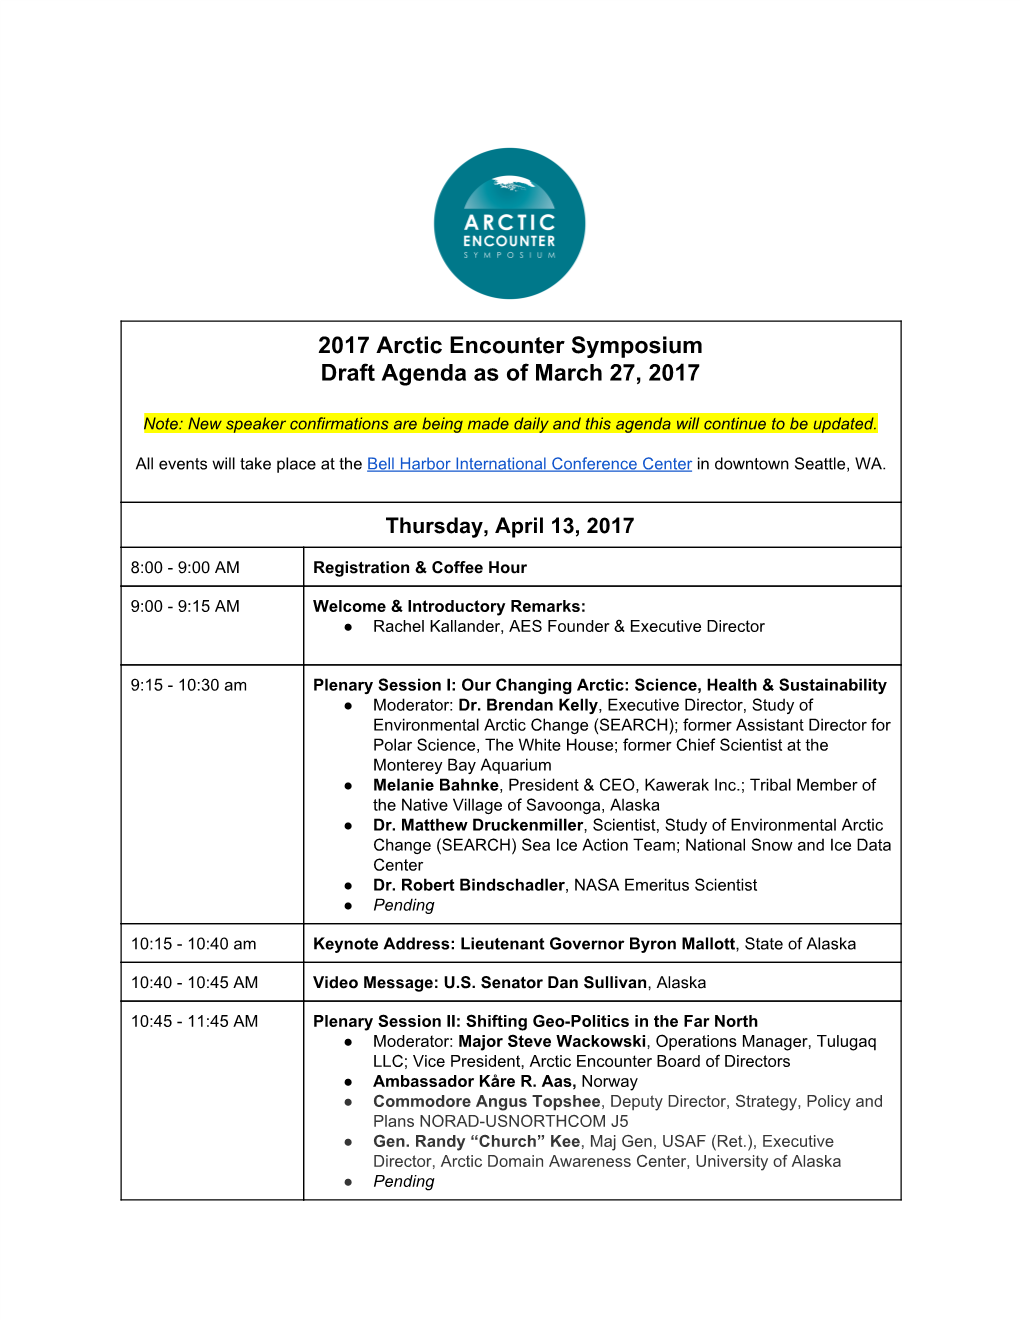 2017 Arctic Encounter Symposium Draft Agenda As of March 27, 2017